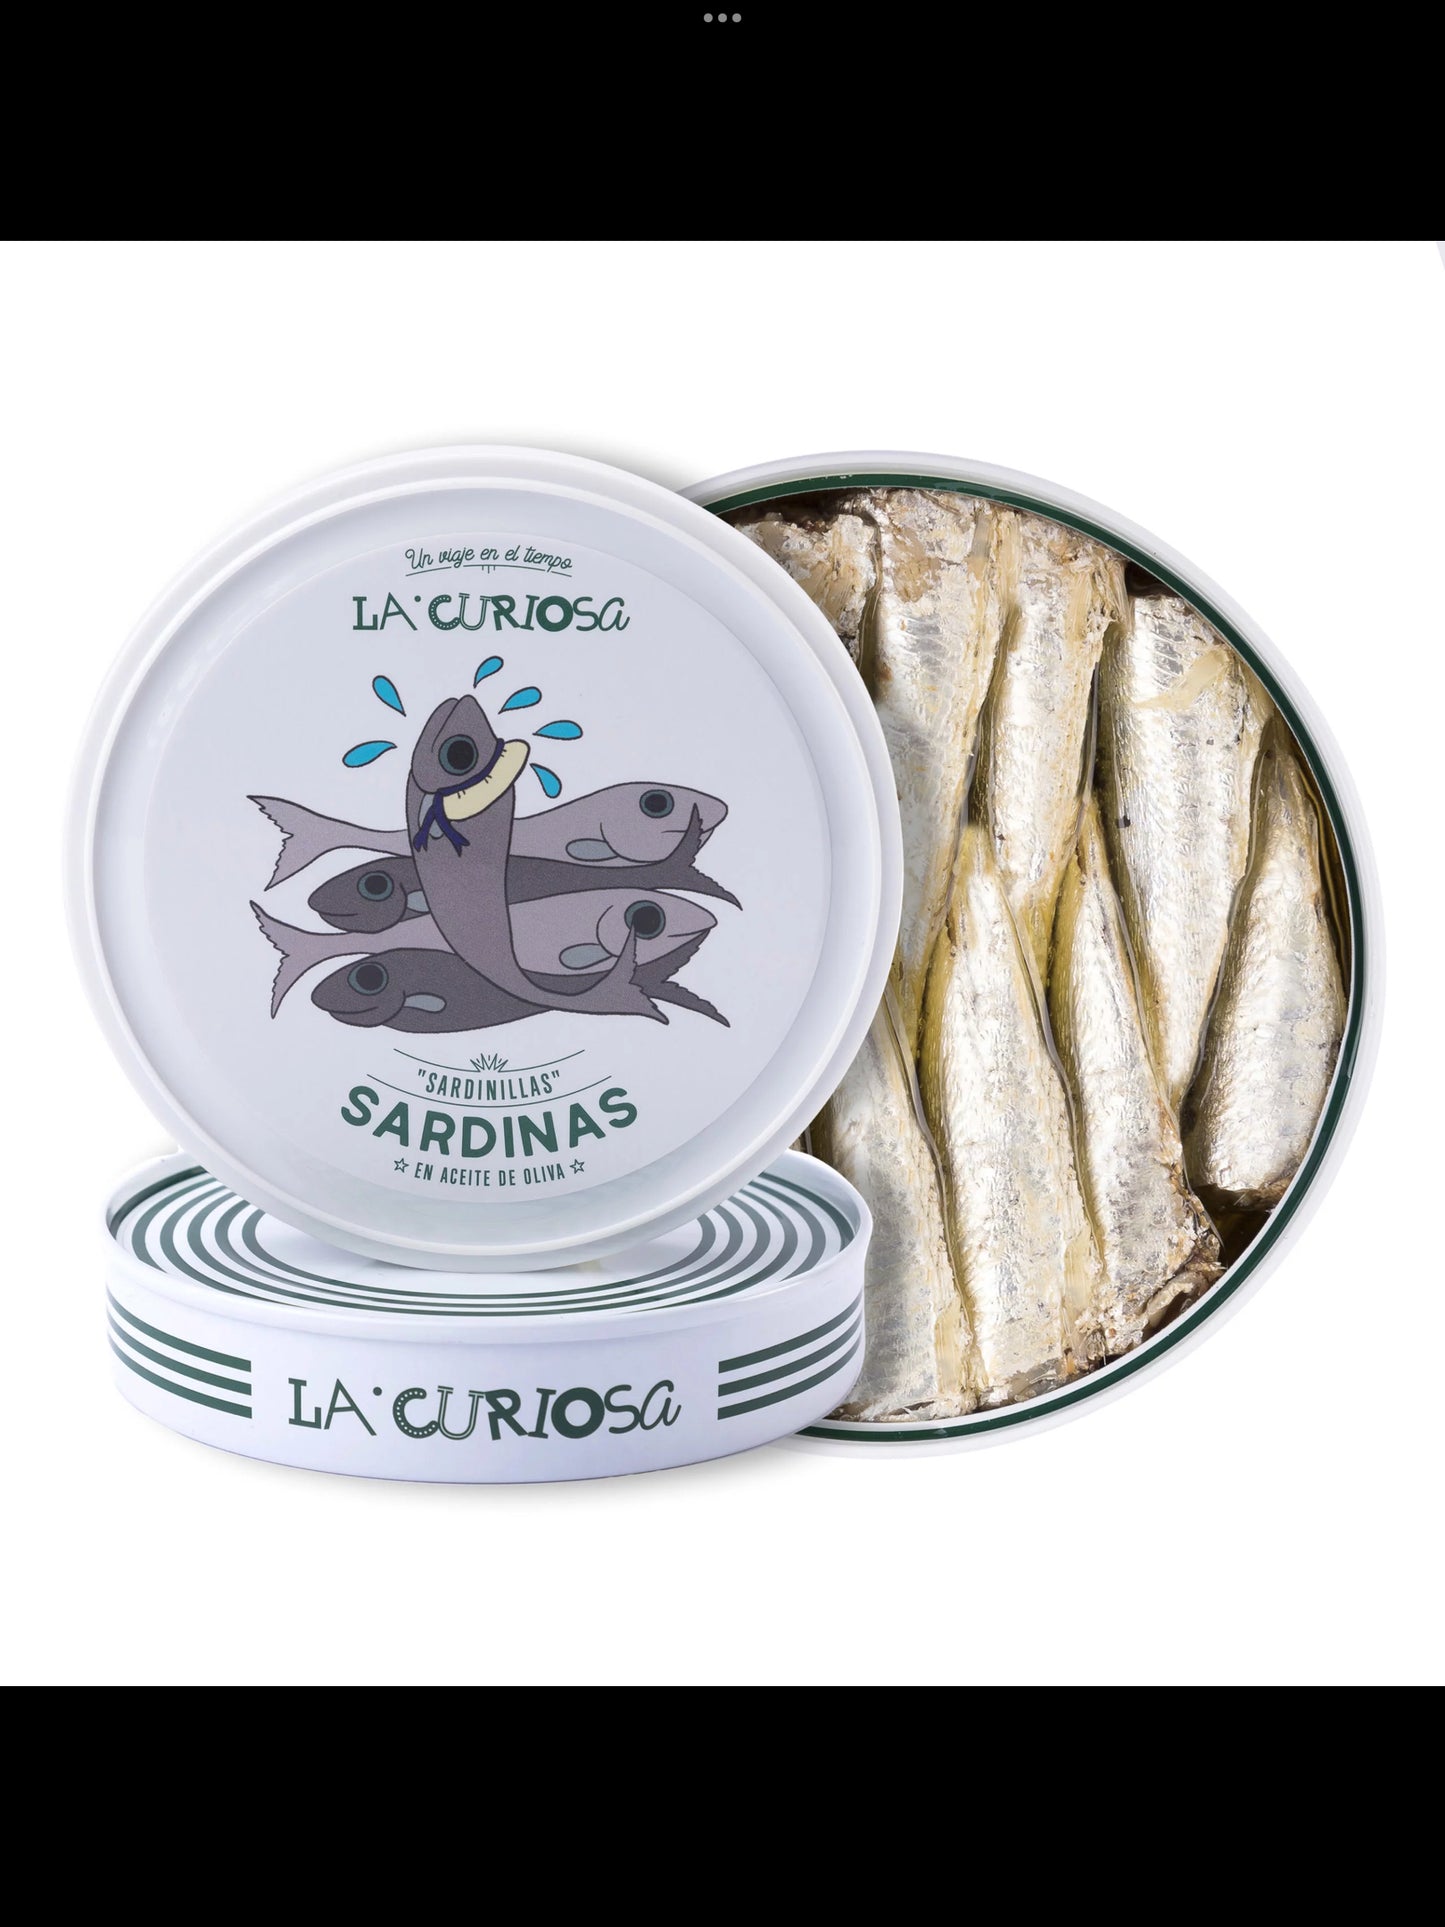 Sardines in extra virgin olive oil